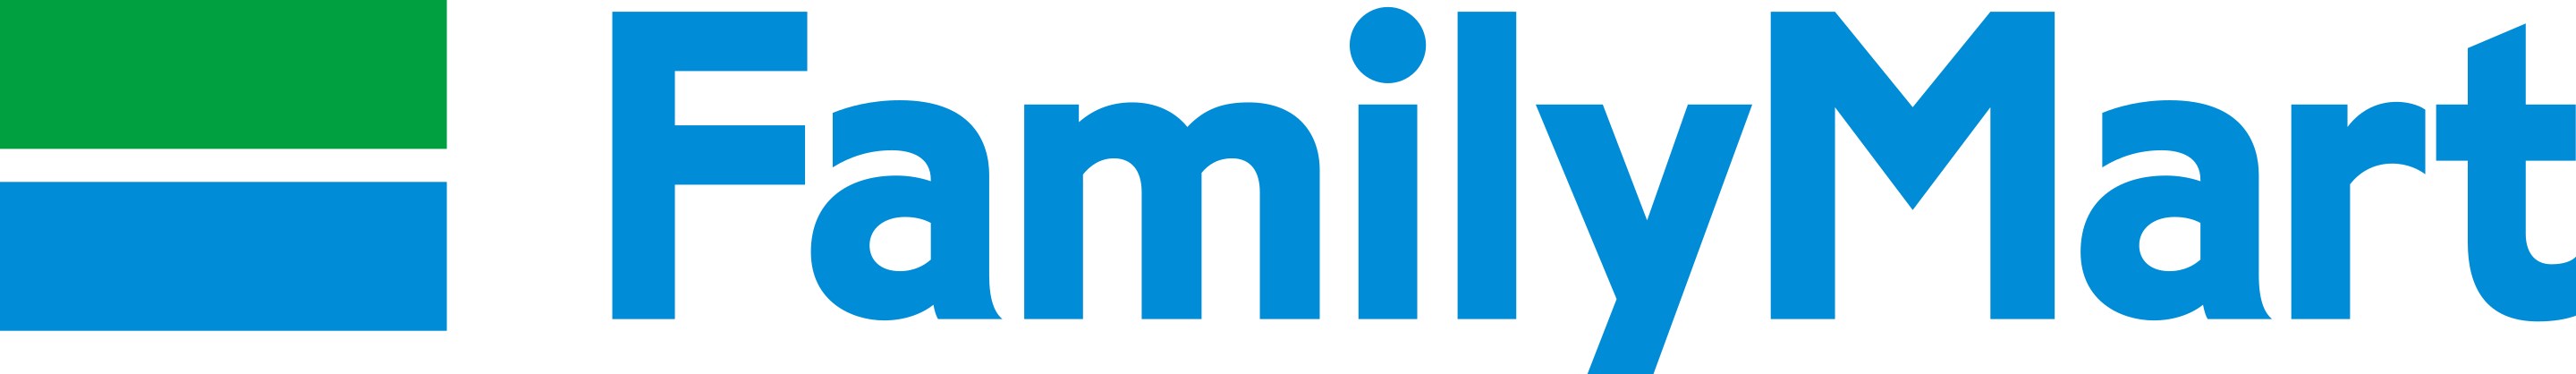 Family mart. Family Mart магазин. INDIAMART logo. Runmart логотип. Thai Mart logo.